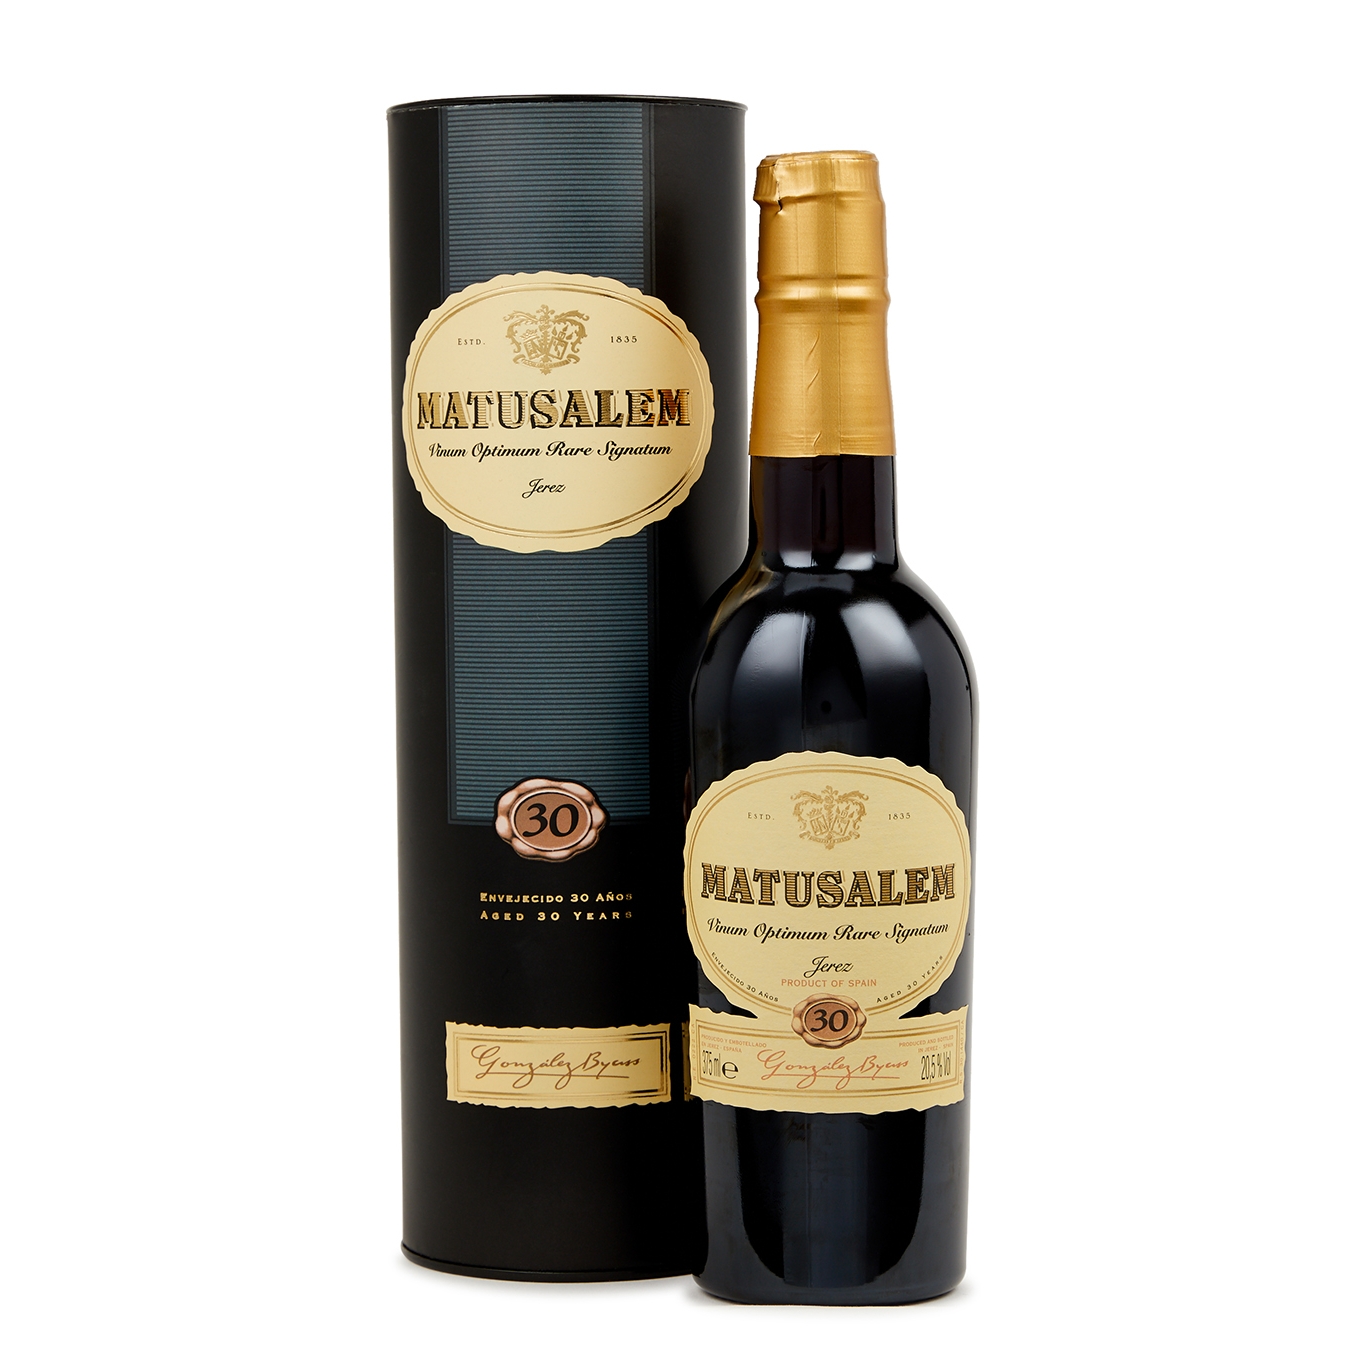 González Byass Matusalem 30 Year Old Oloroso Sherry Half Bottle 375ml Port And Fortified Wine